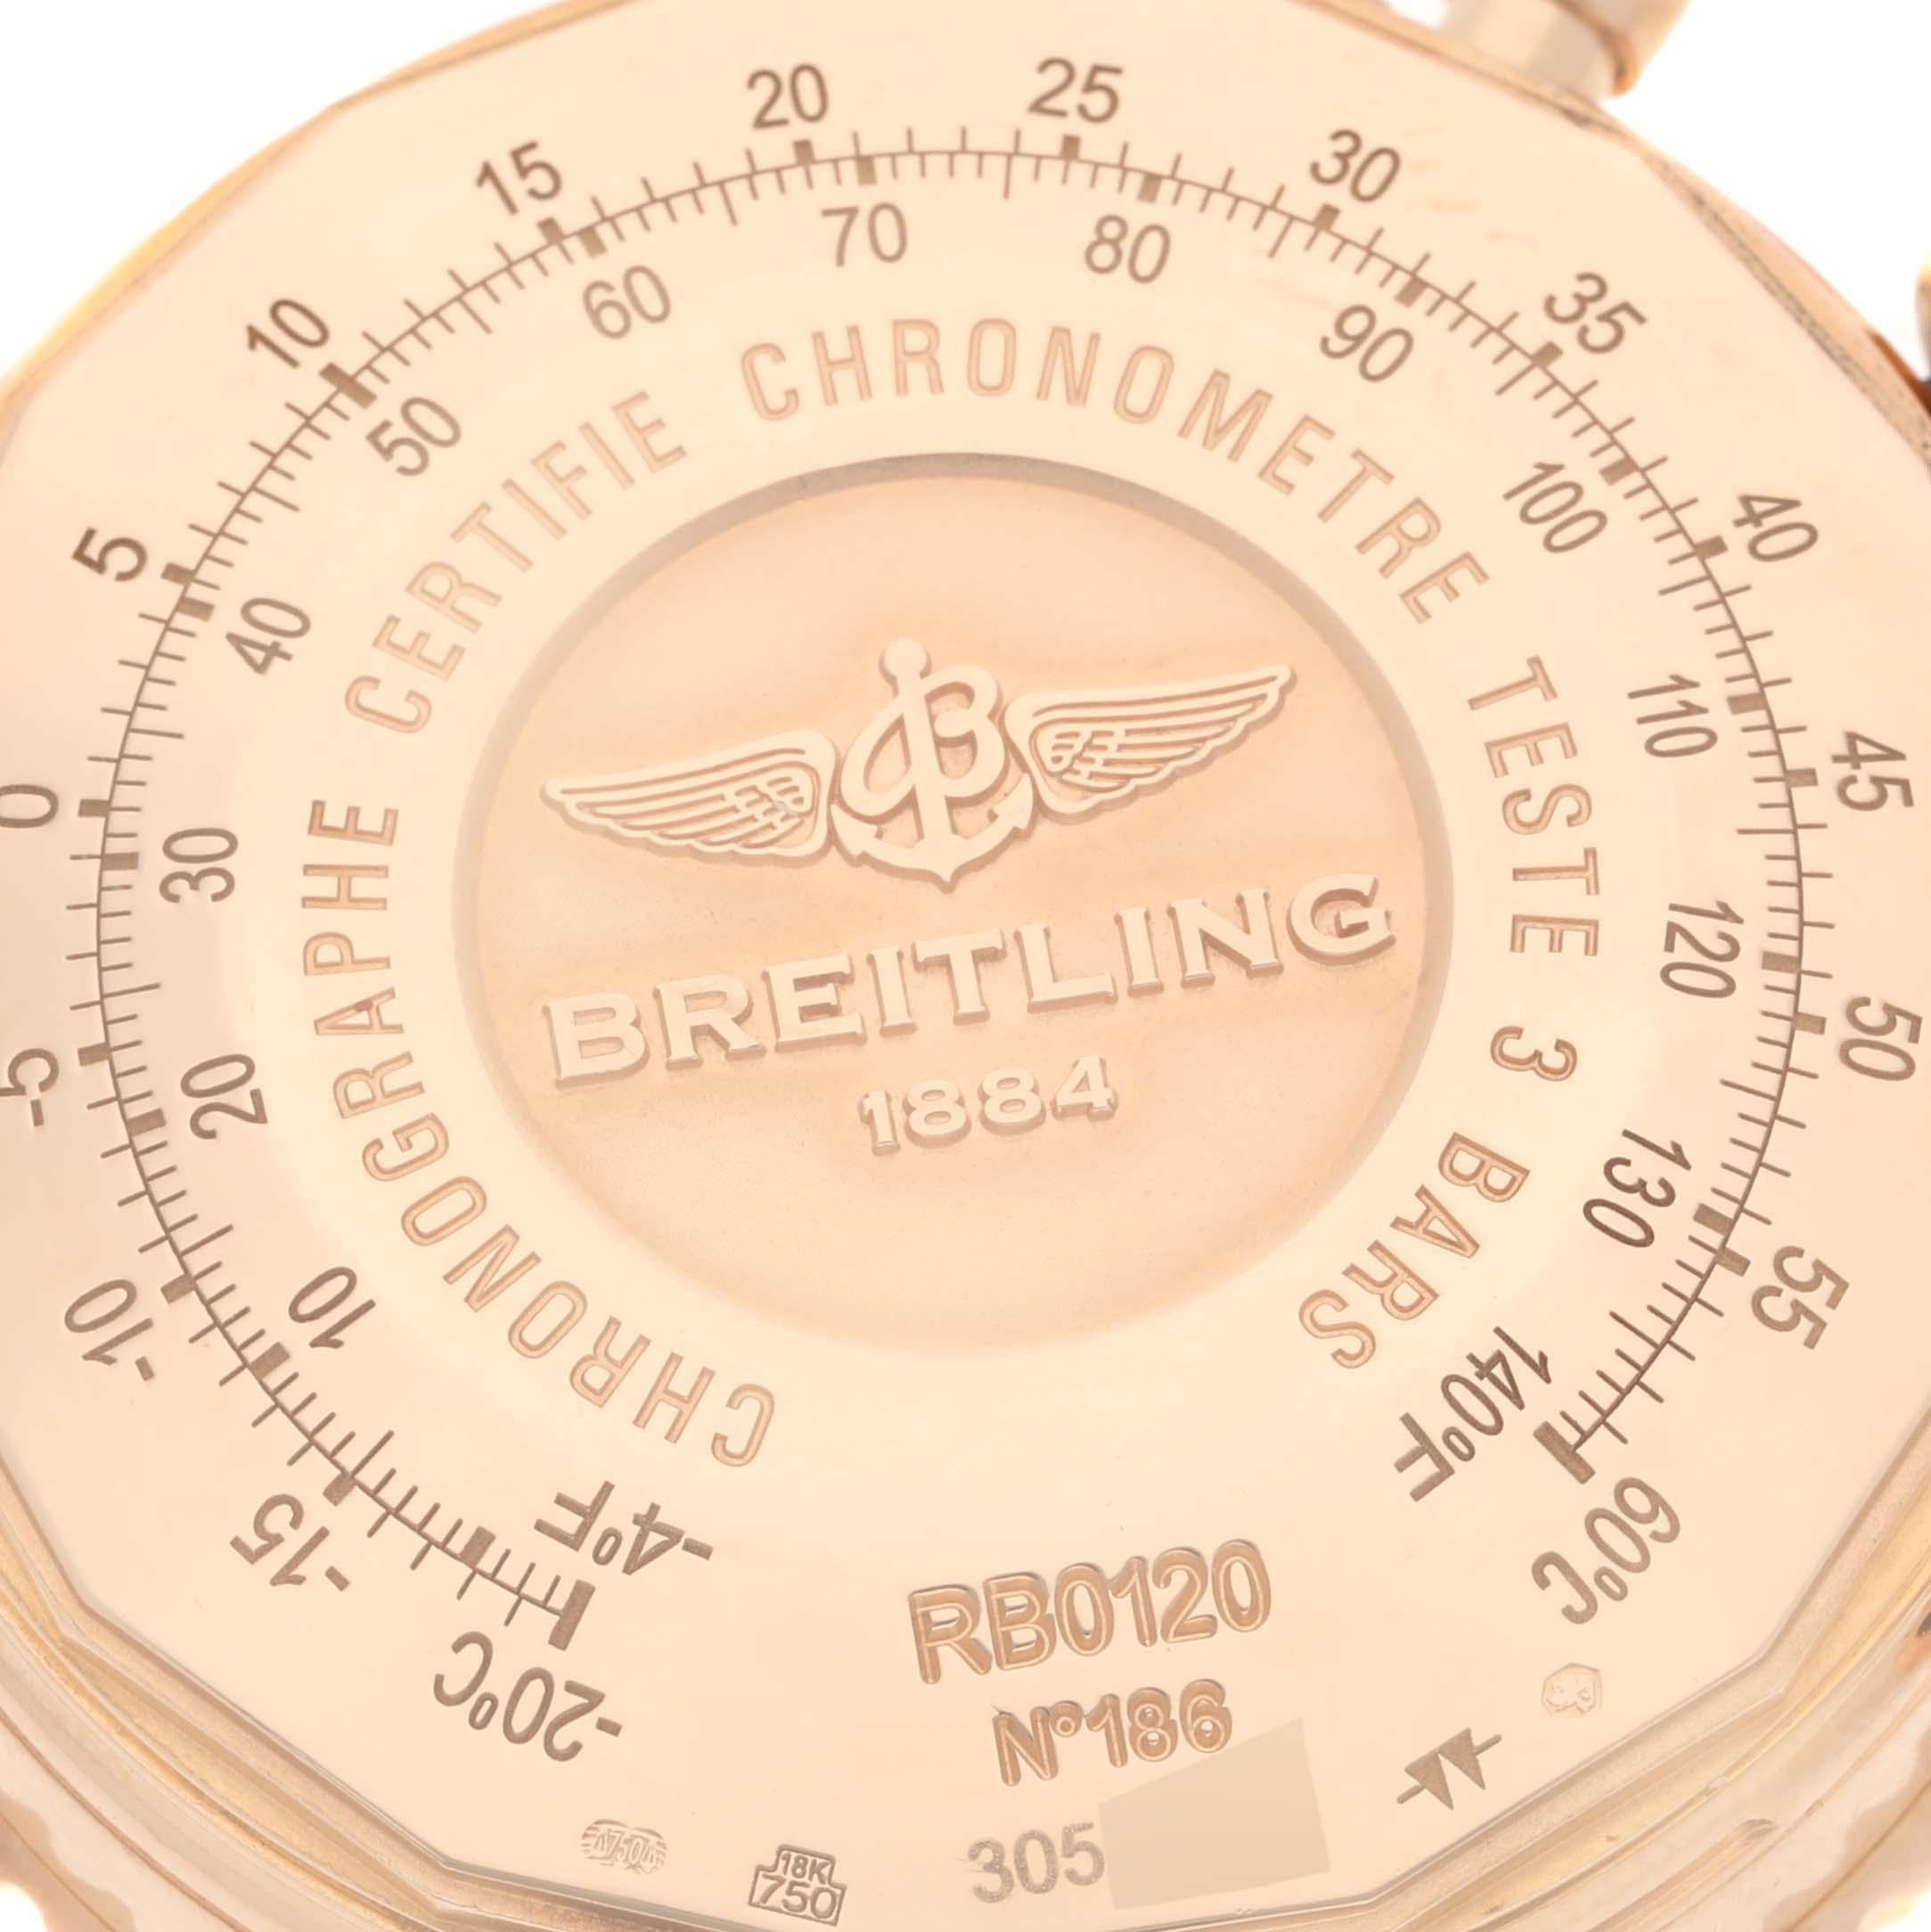 Breitling Navitimer 01 Rose Gold Black Dial Mens Watch RB0120 3